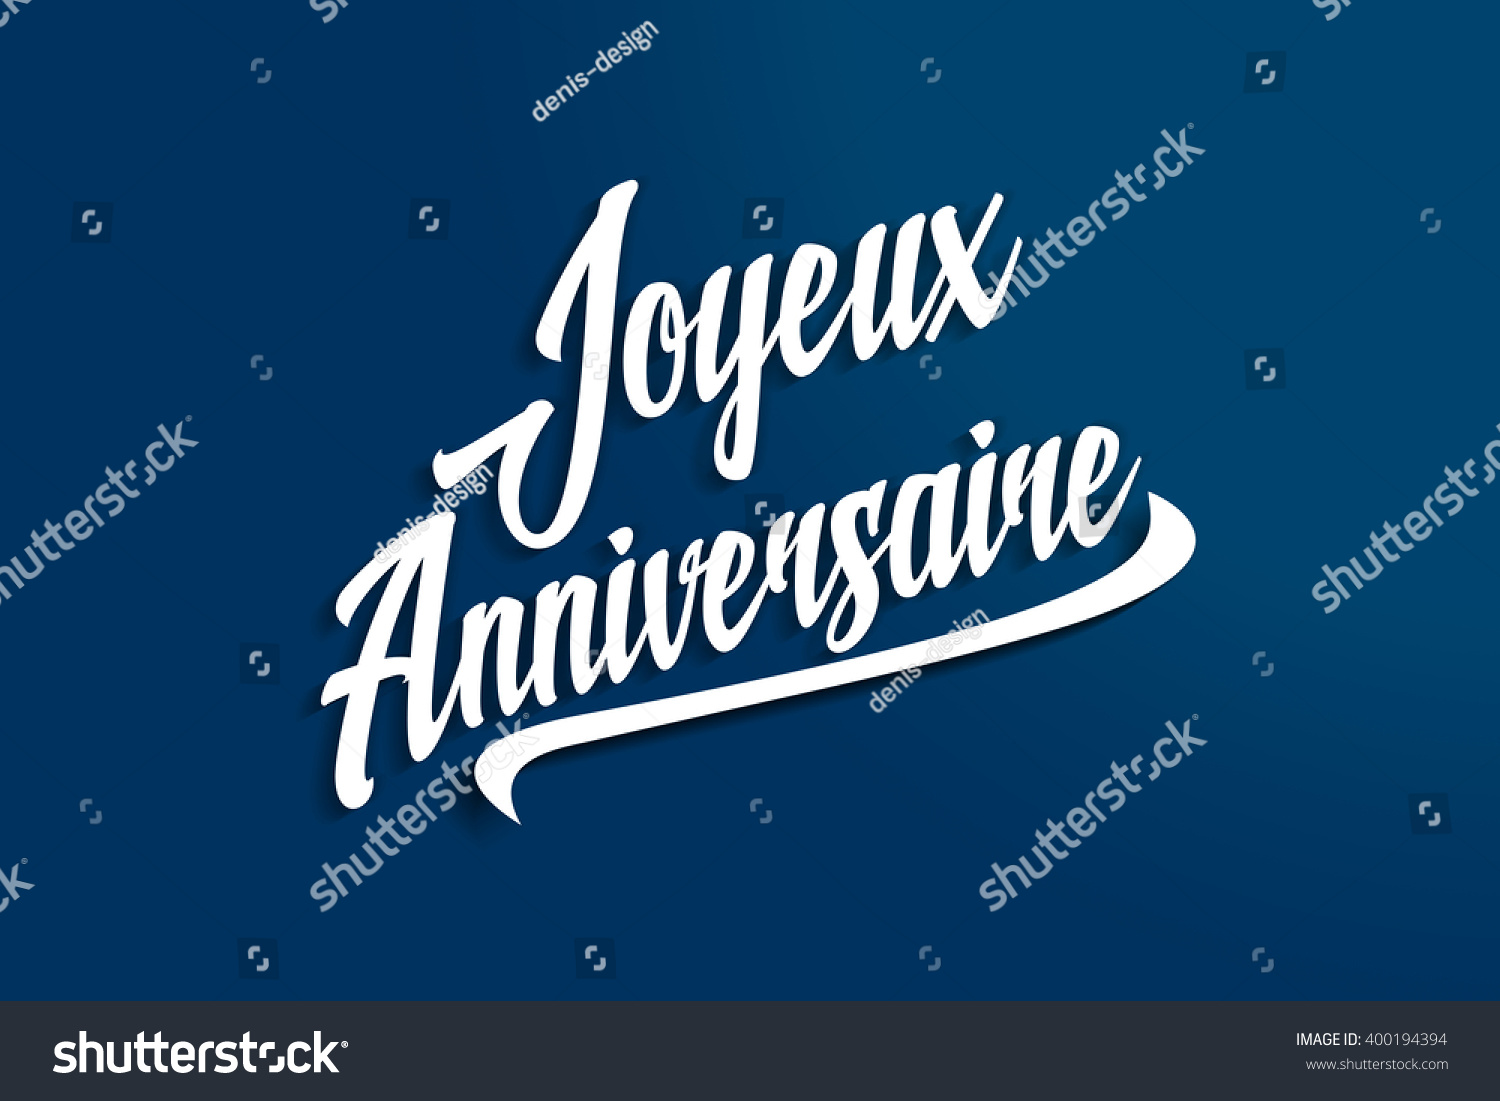 Joyeux Anniversaire Happy Birthday French Anniversary Stock Illustration